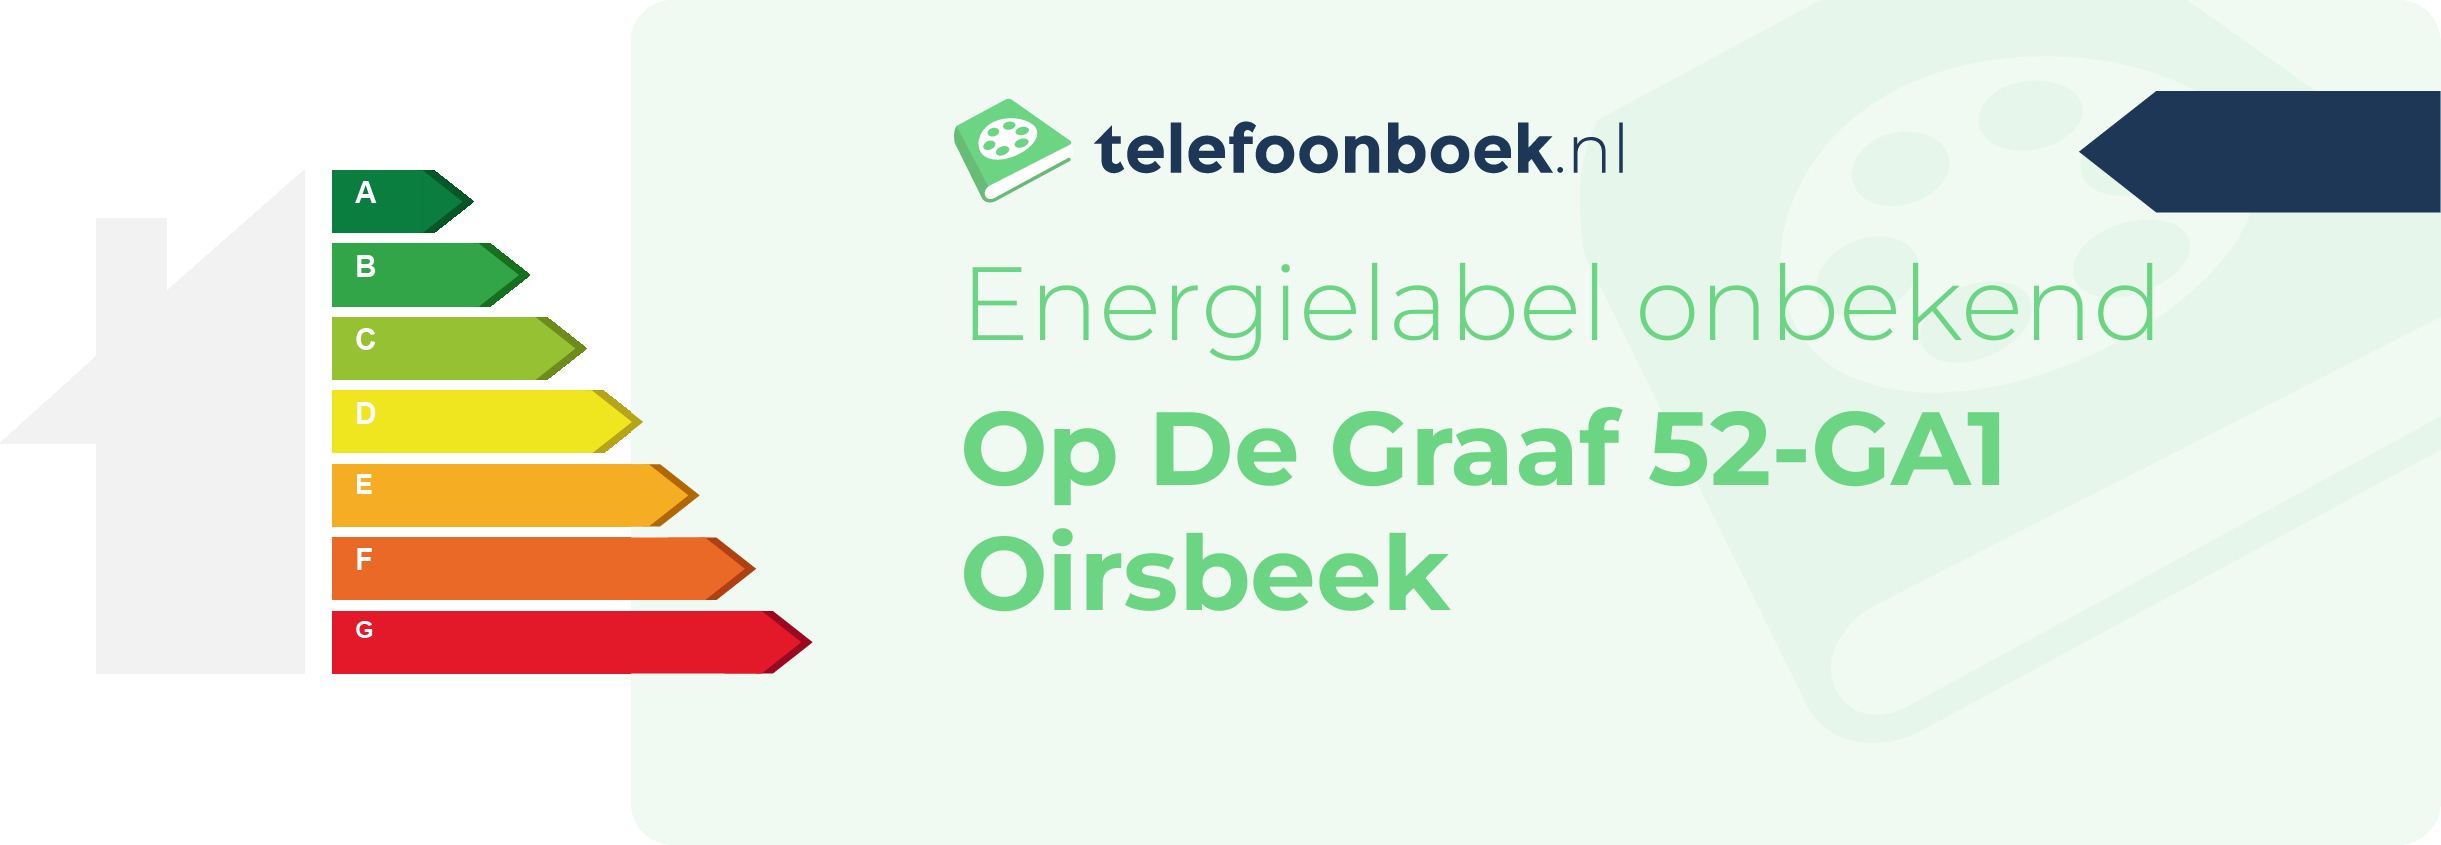 Energielabel Op De Graaf 52-GA1 Oirsbeek